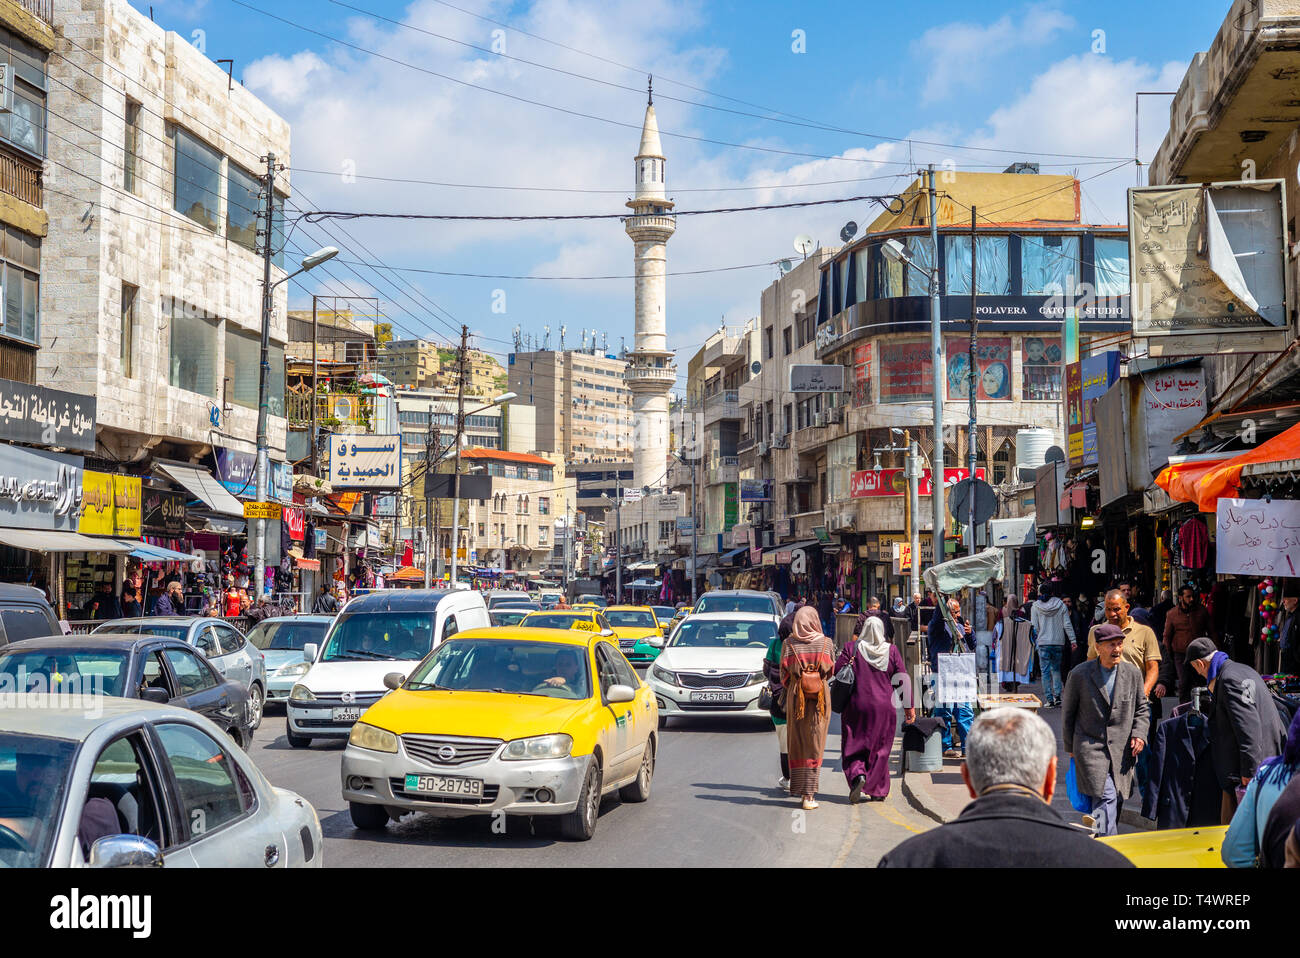 Amman, Jordan - March 28, 2019: street view of amman, the capital city of jordan Stock Photo